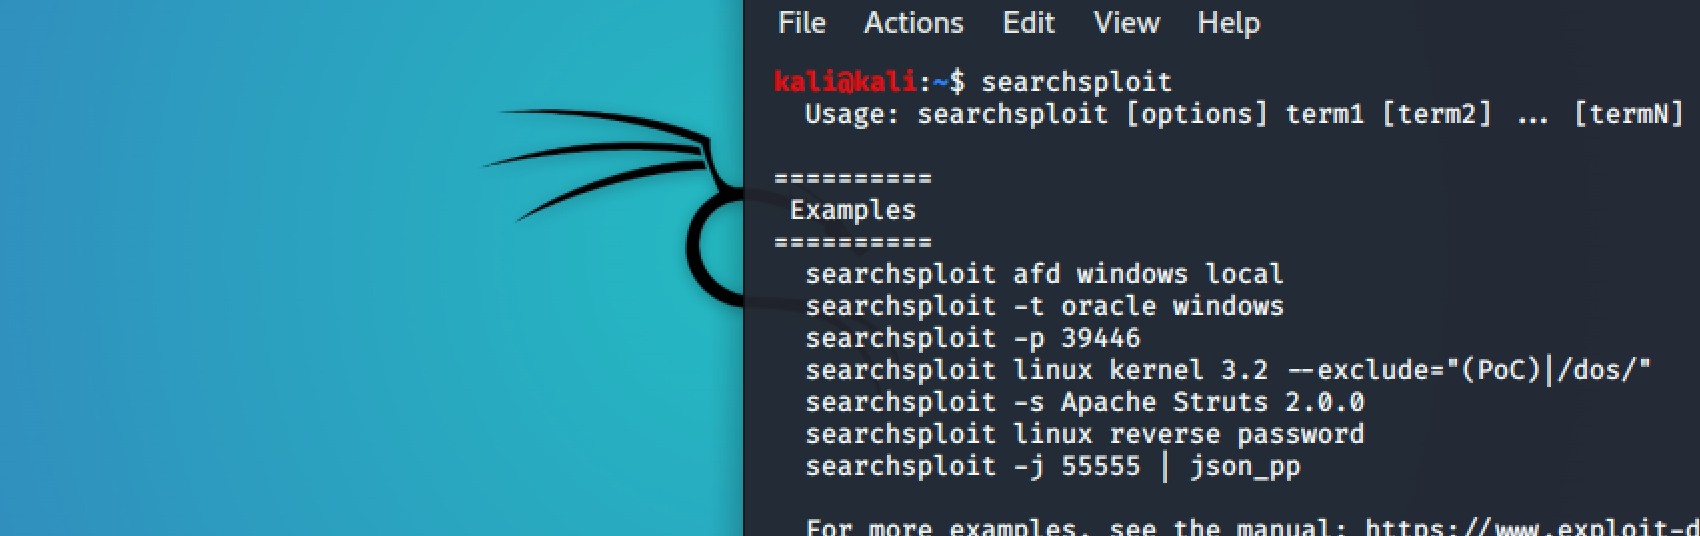 SearchSploit usage